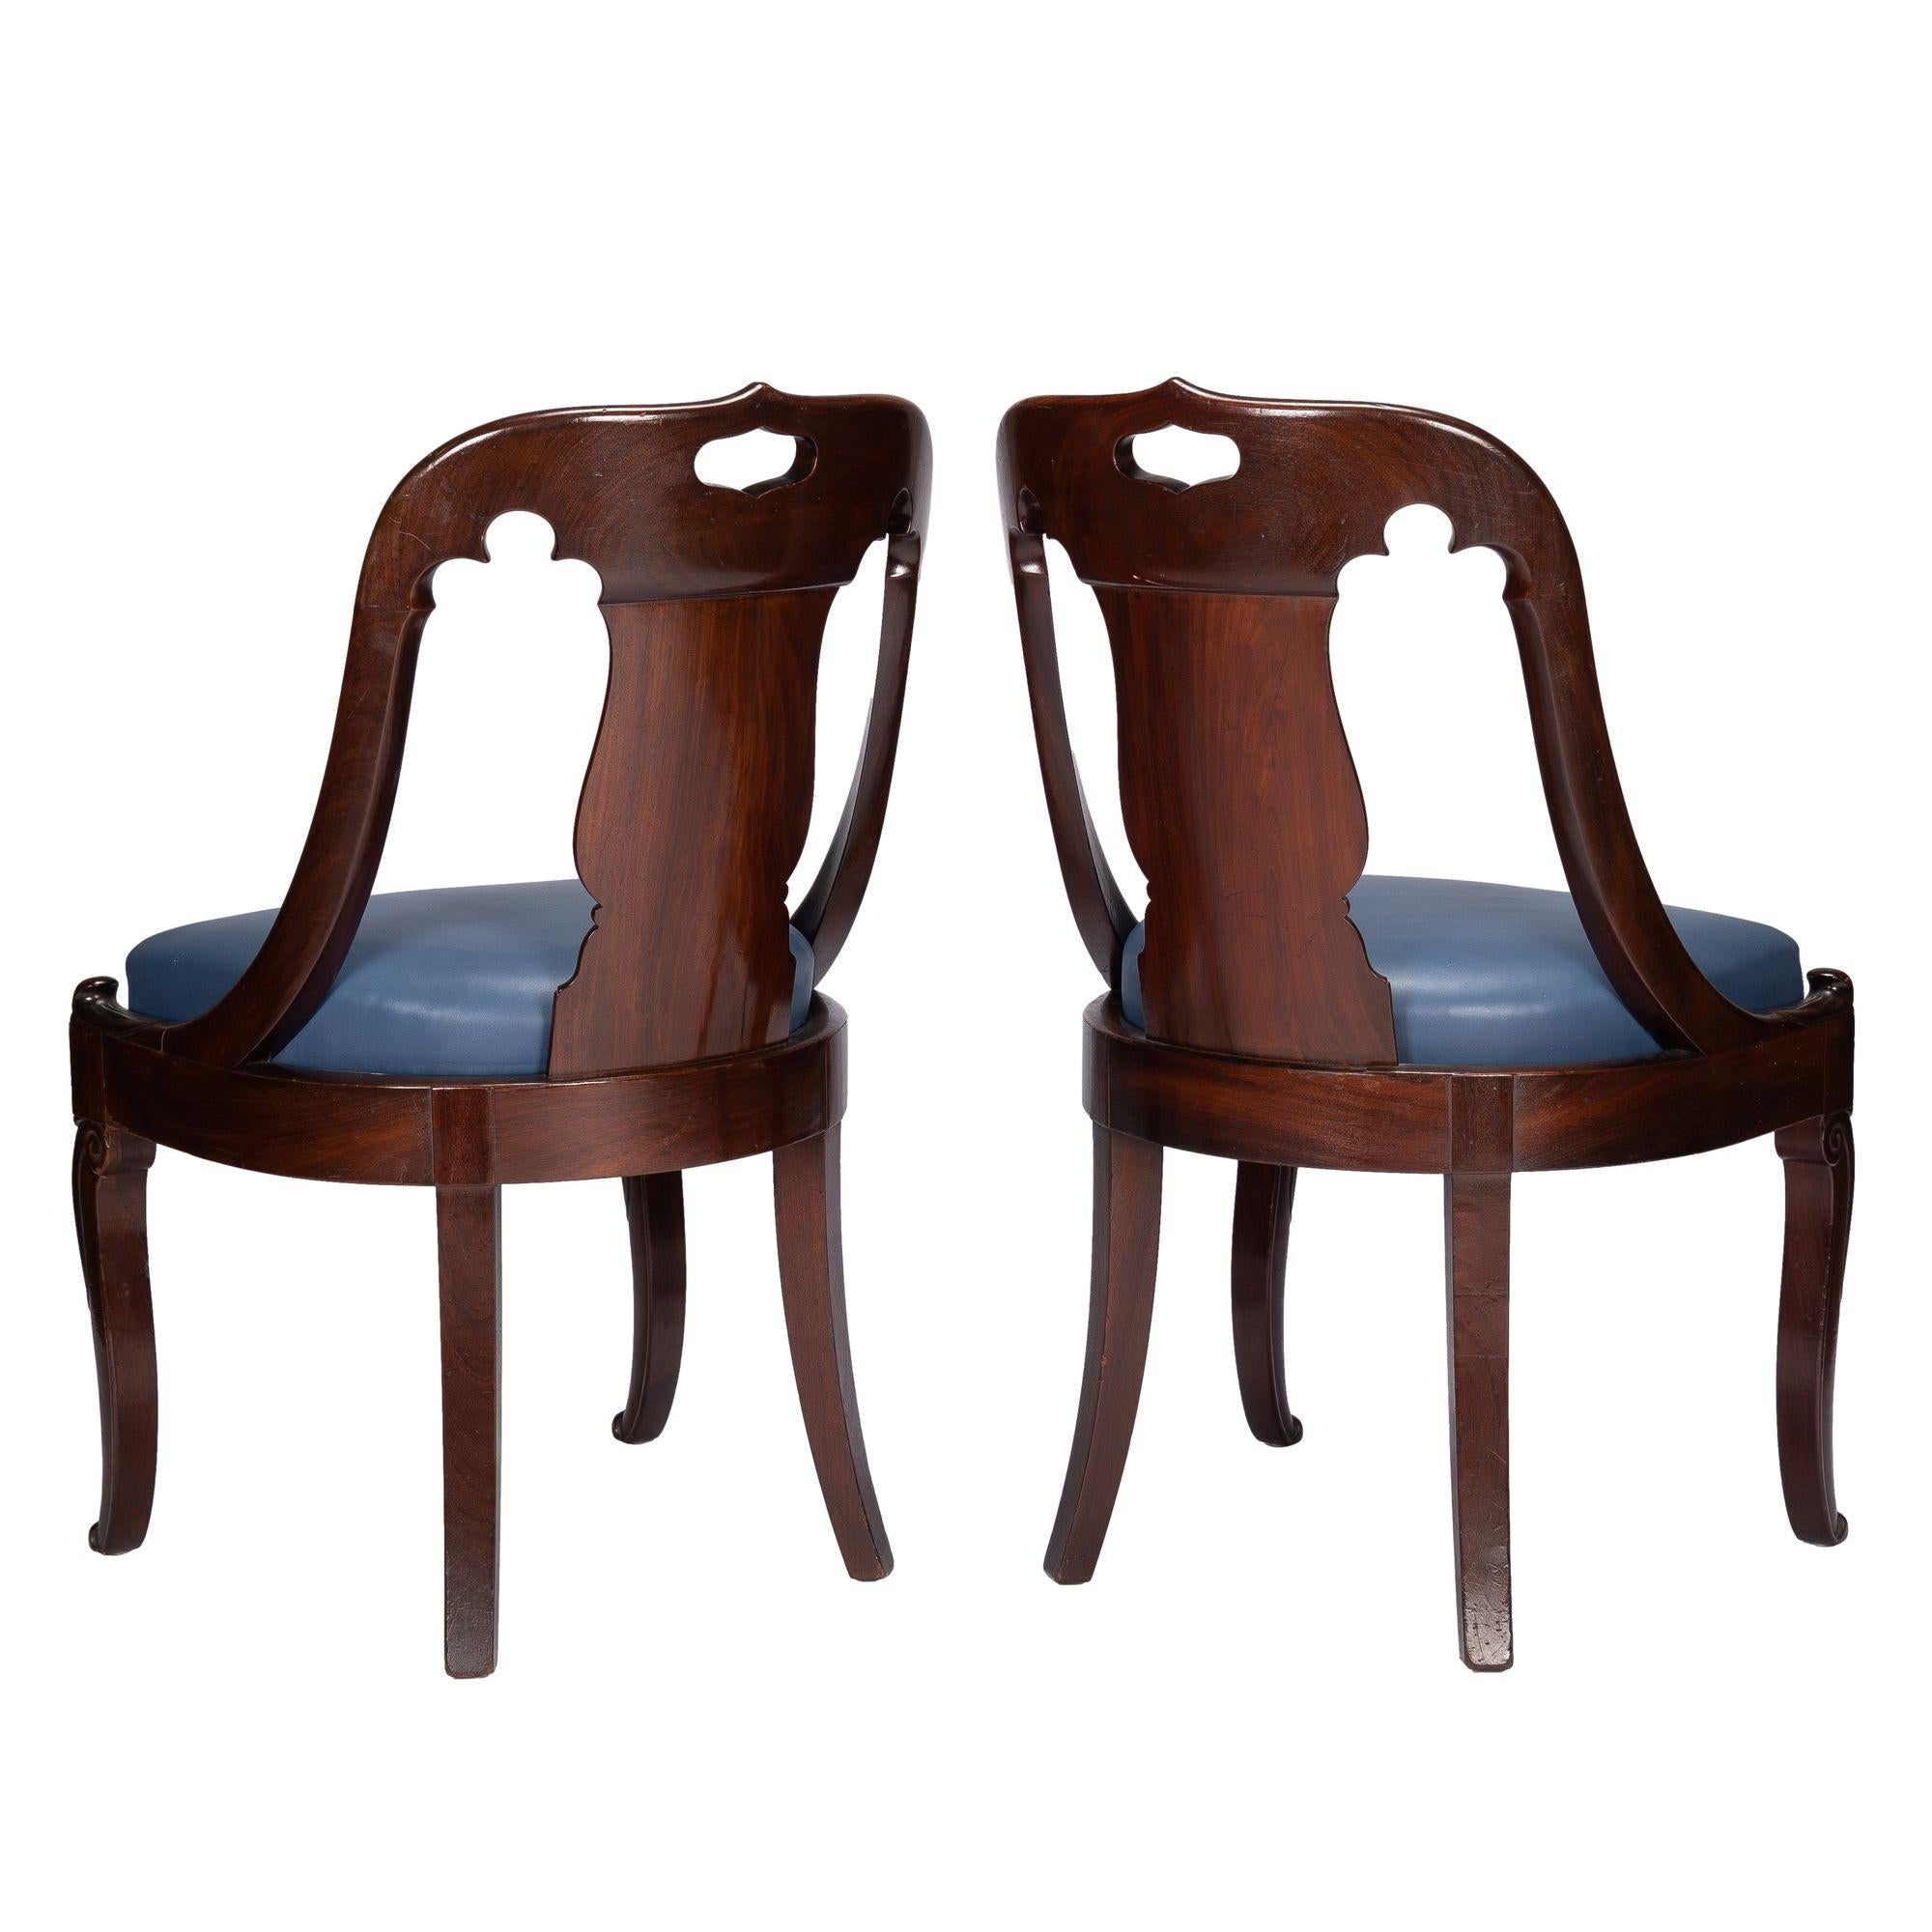 19th Century Pair of French Charles X gondola chairs, 1800-20